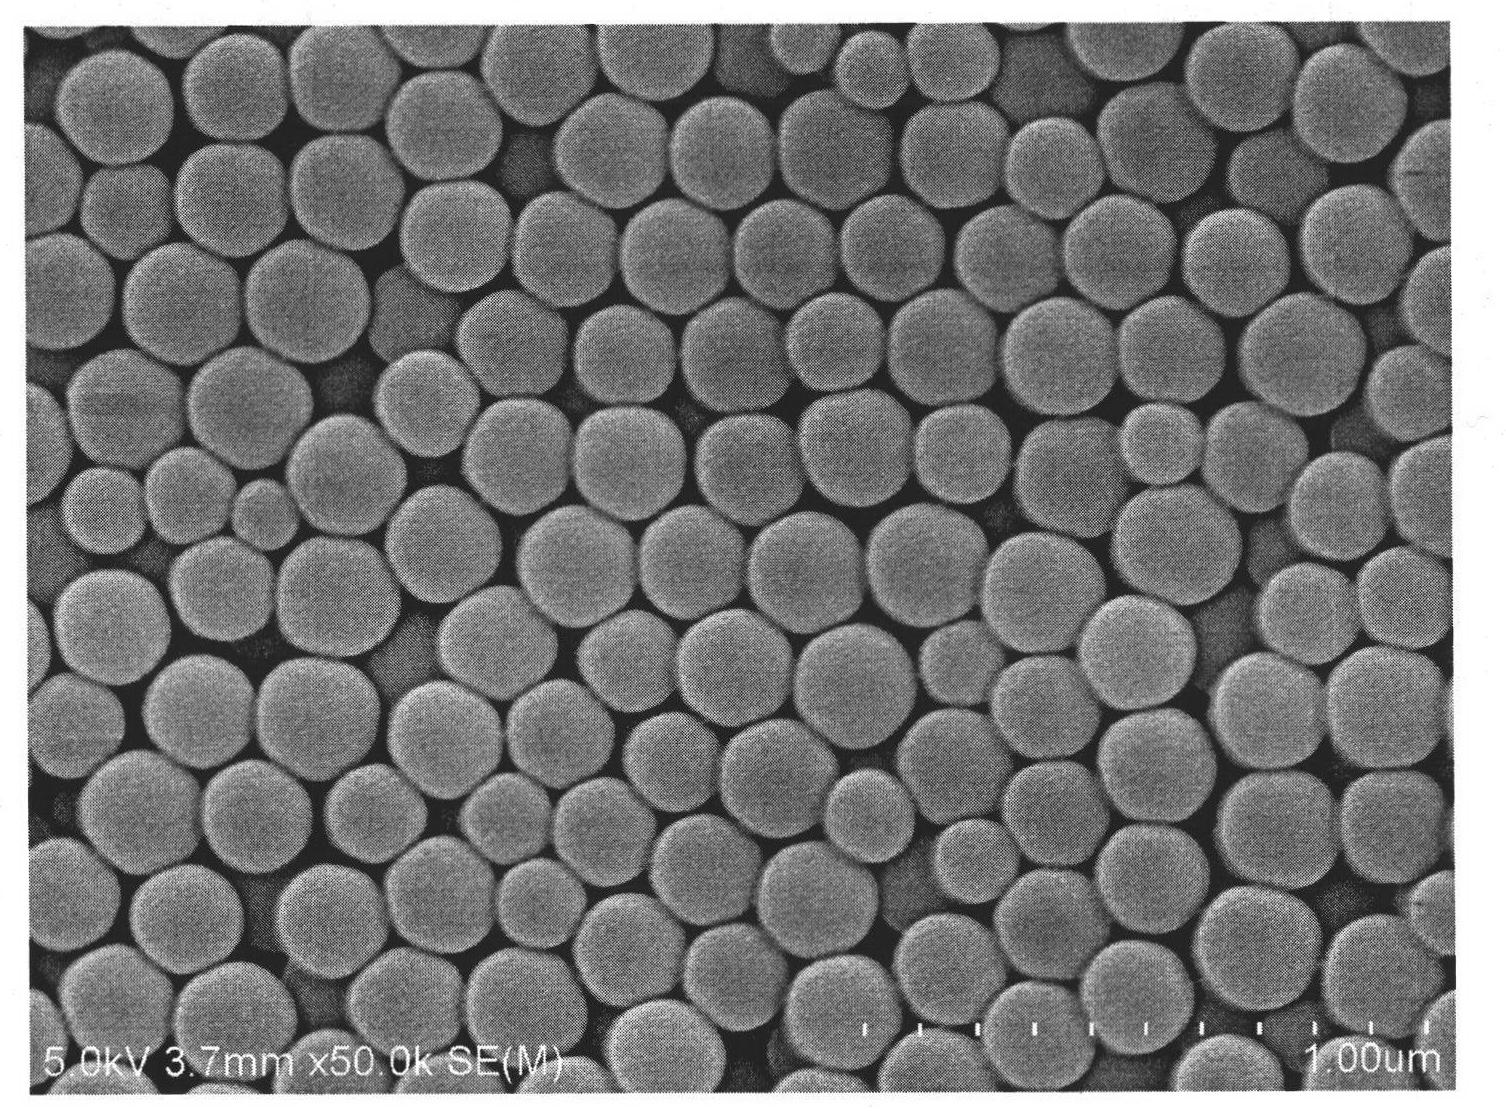 Titanium dioxide photonic crystal film for photocatalytic degradation of organic matters